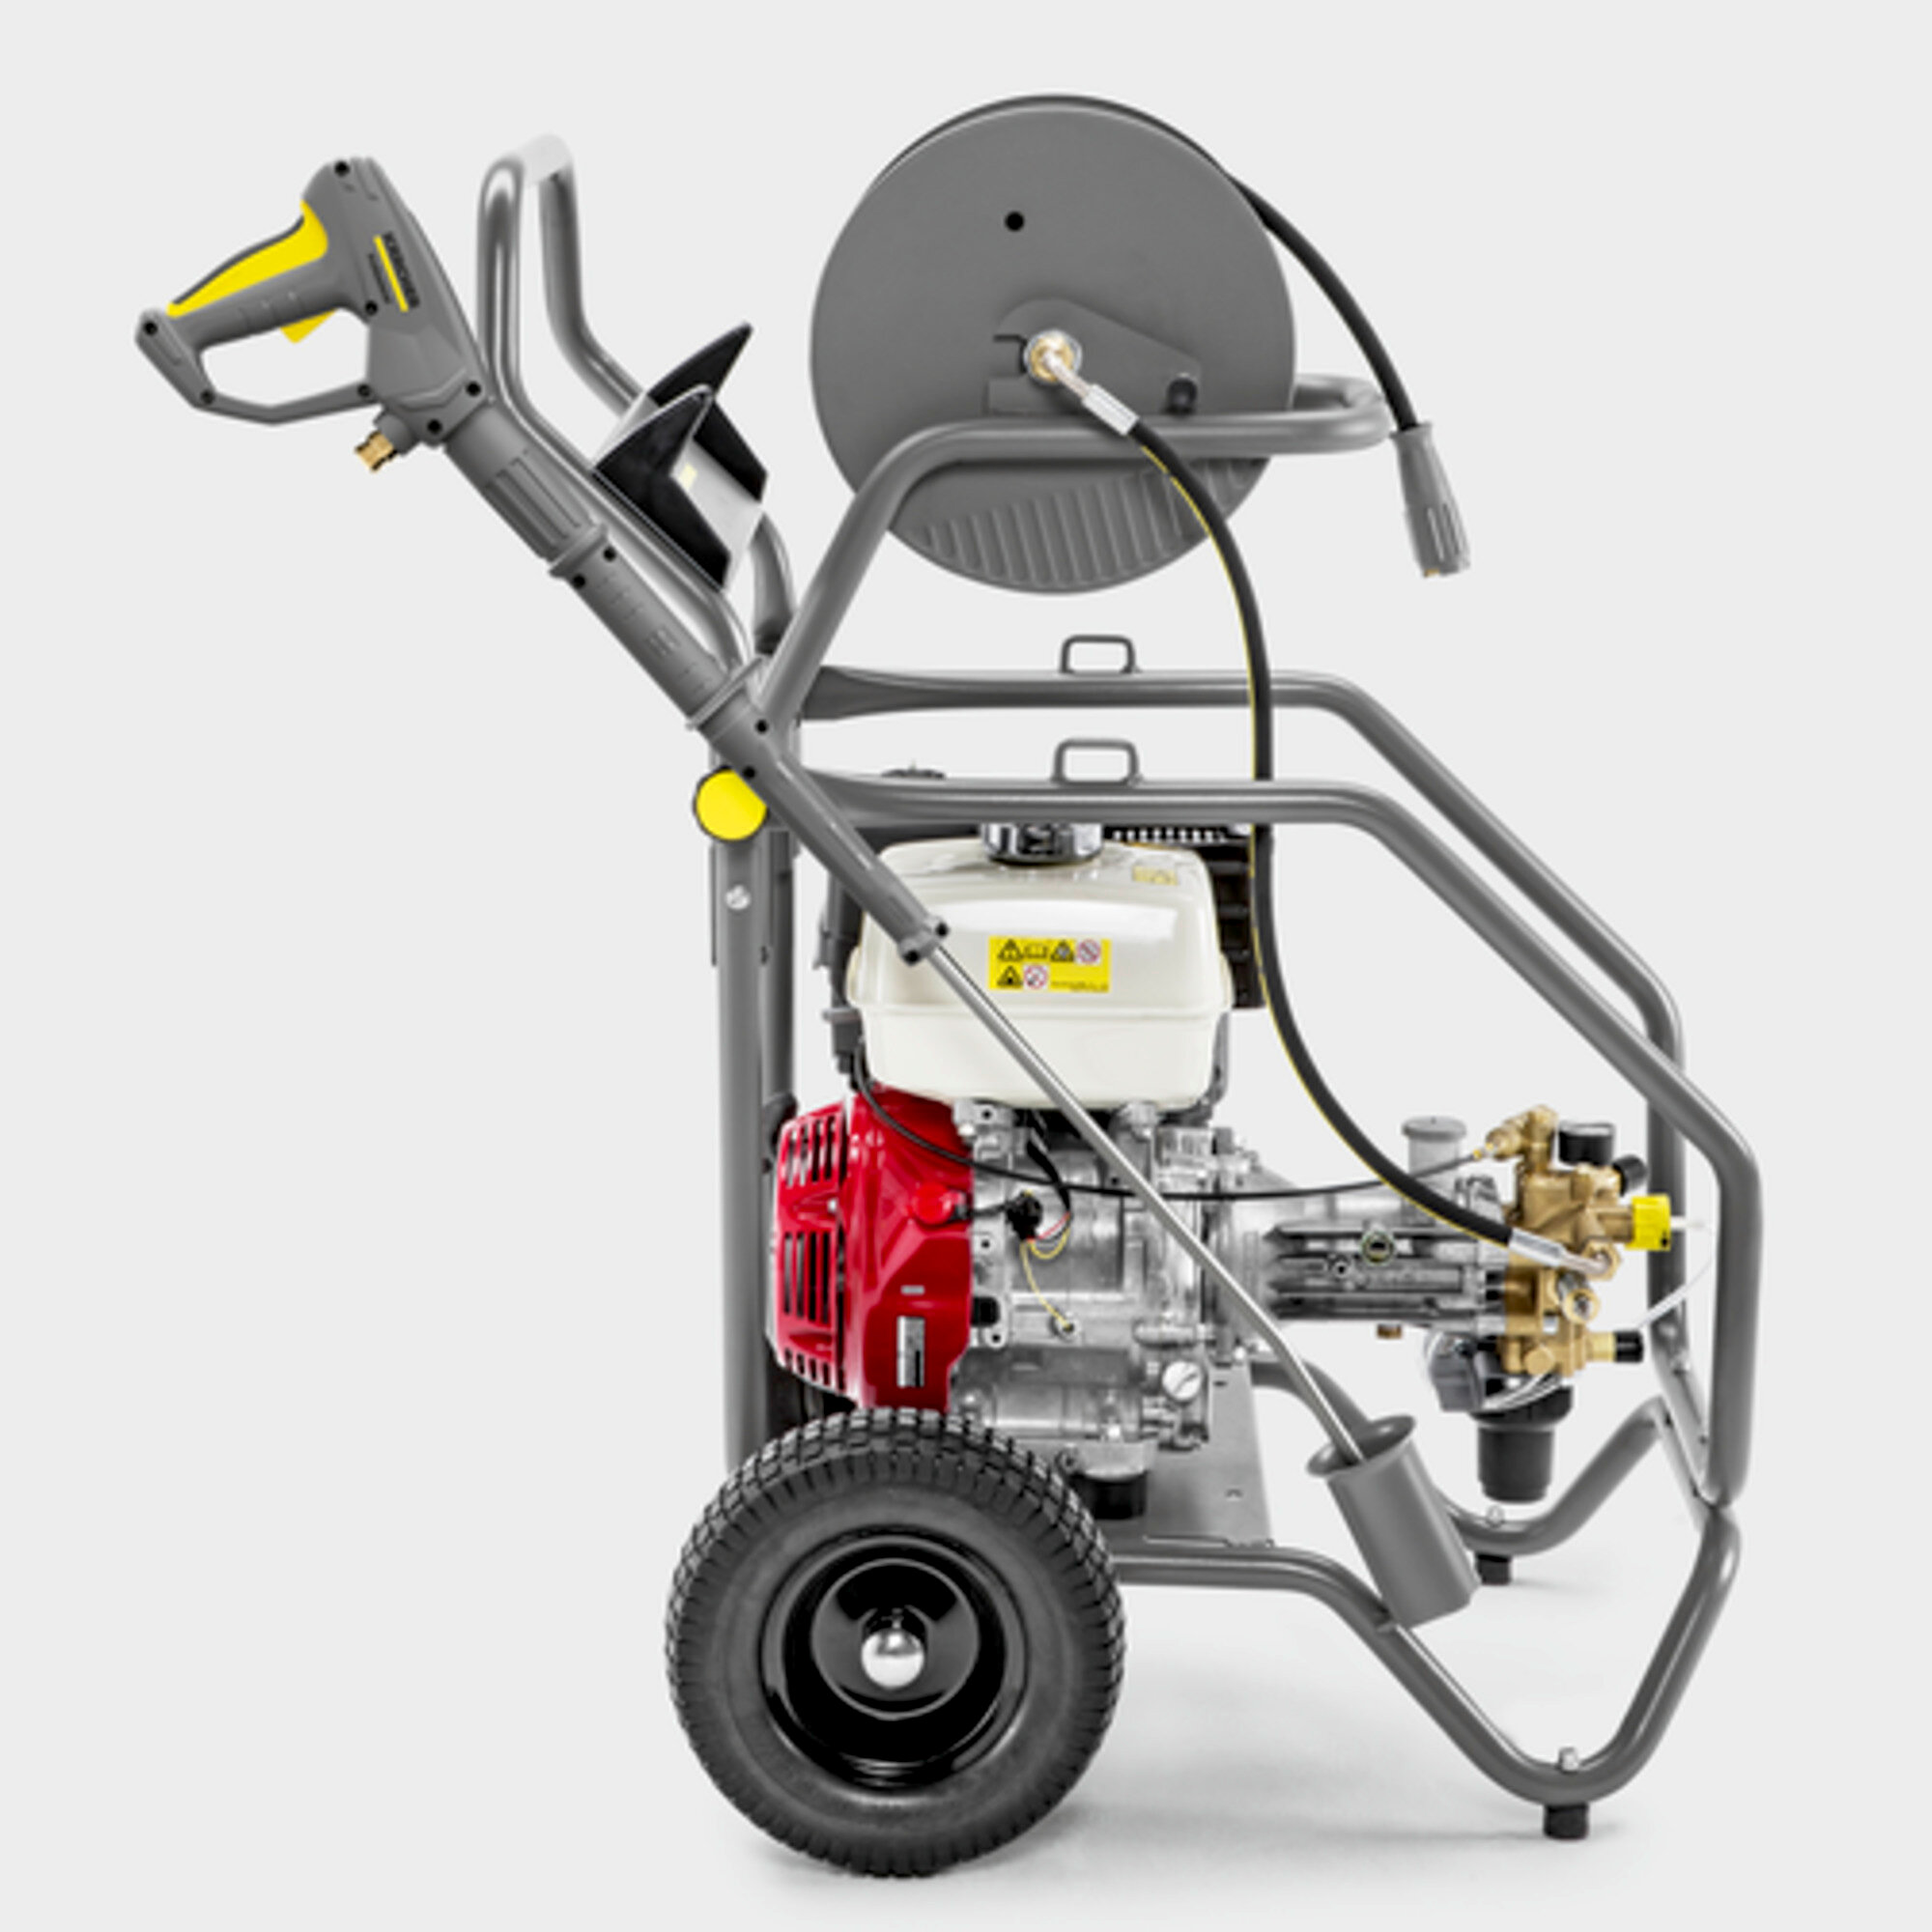 HD 8/20 G 冷水 エンジンタイプ高圧洗浄機 | ケルヒャー